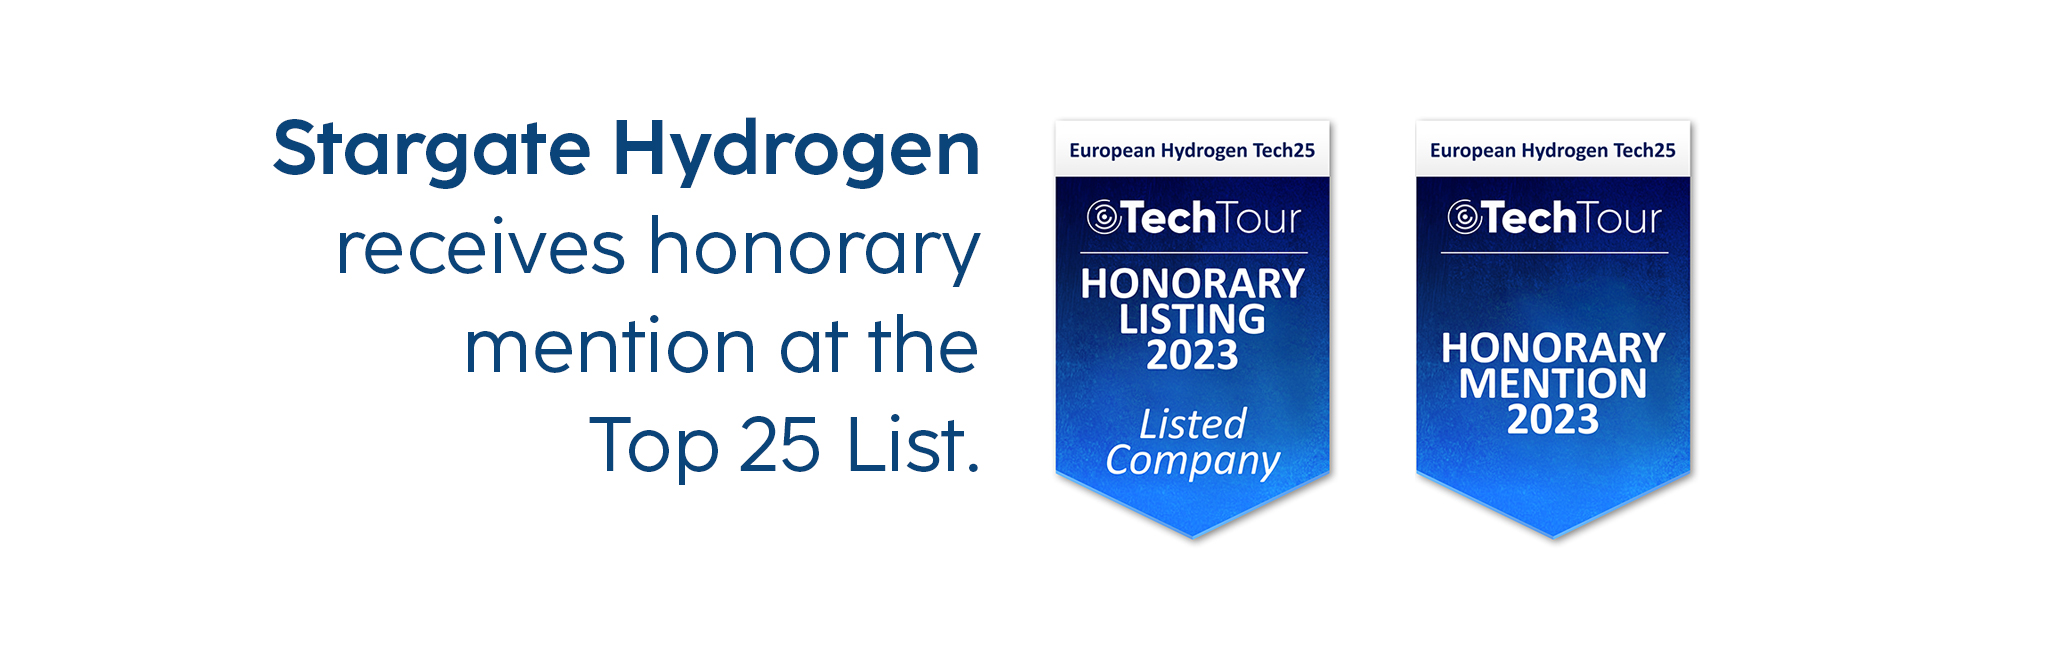 European Hydrogen Tech25